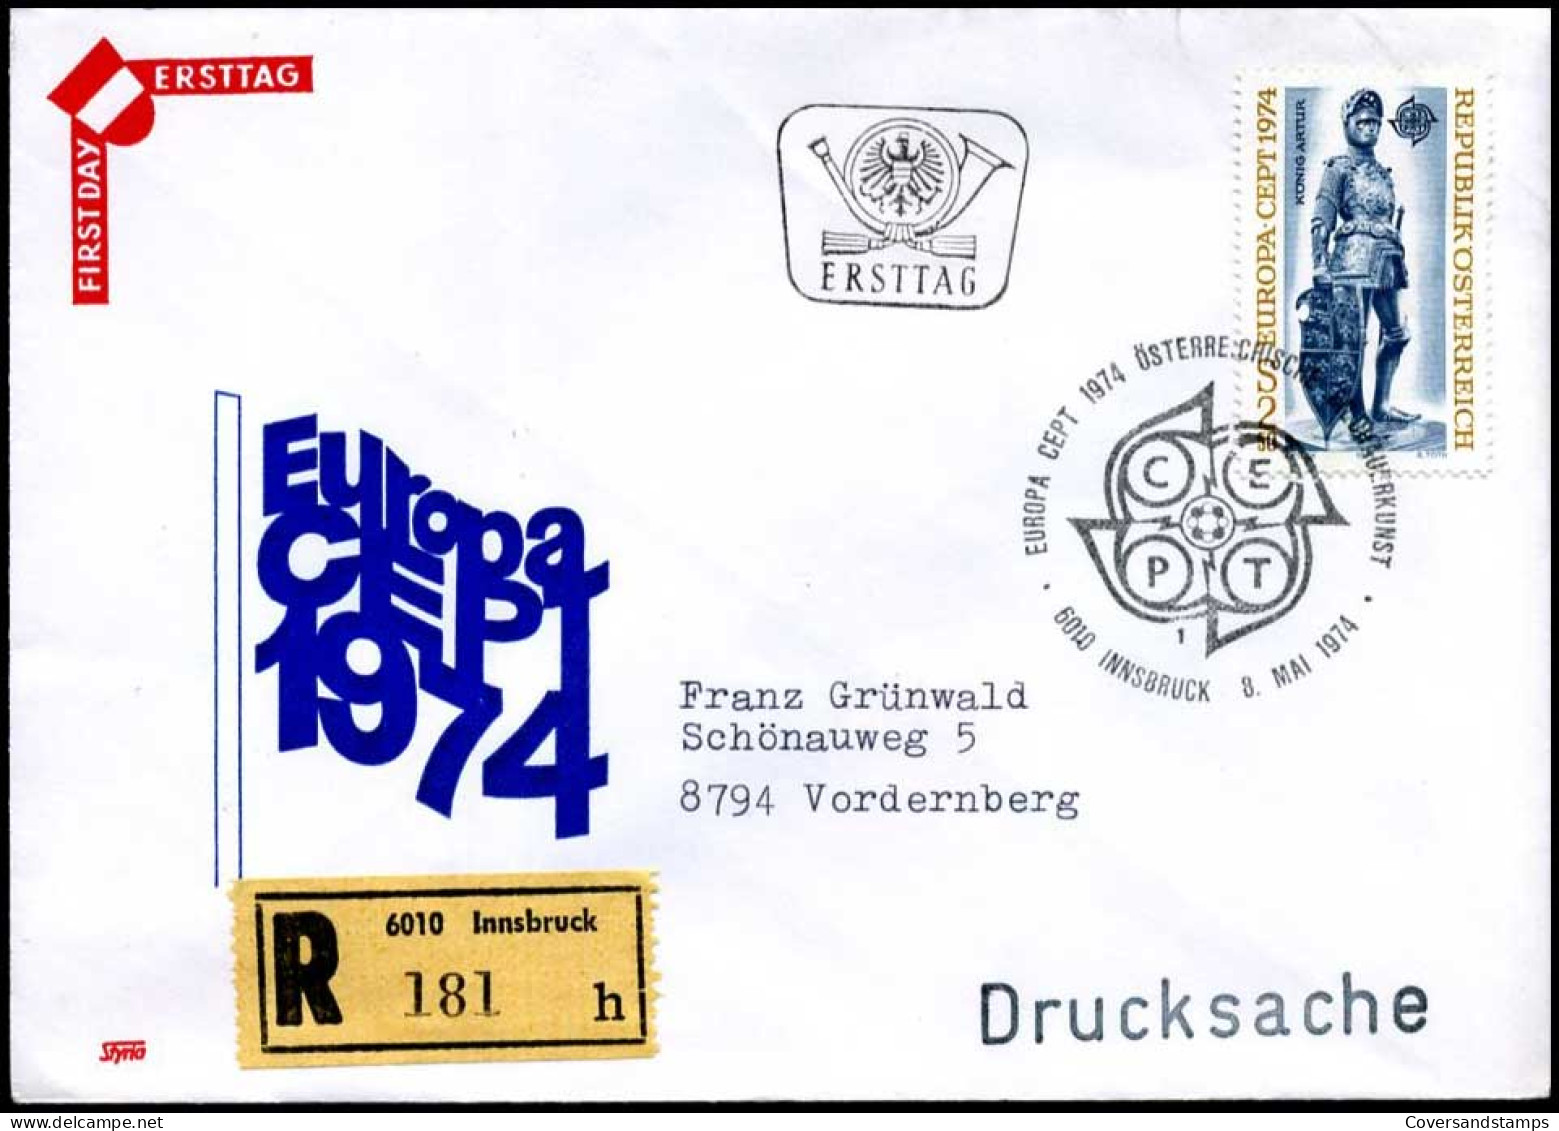  Oostenrijk - FDC - Europa CEPT 1974 - 1974